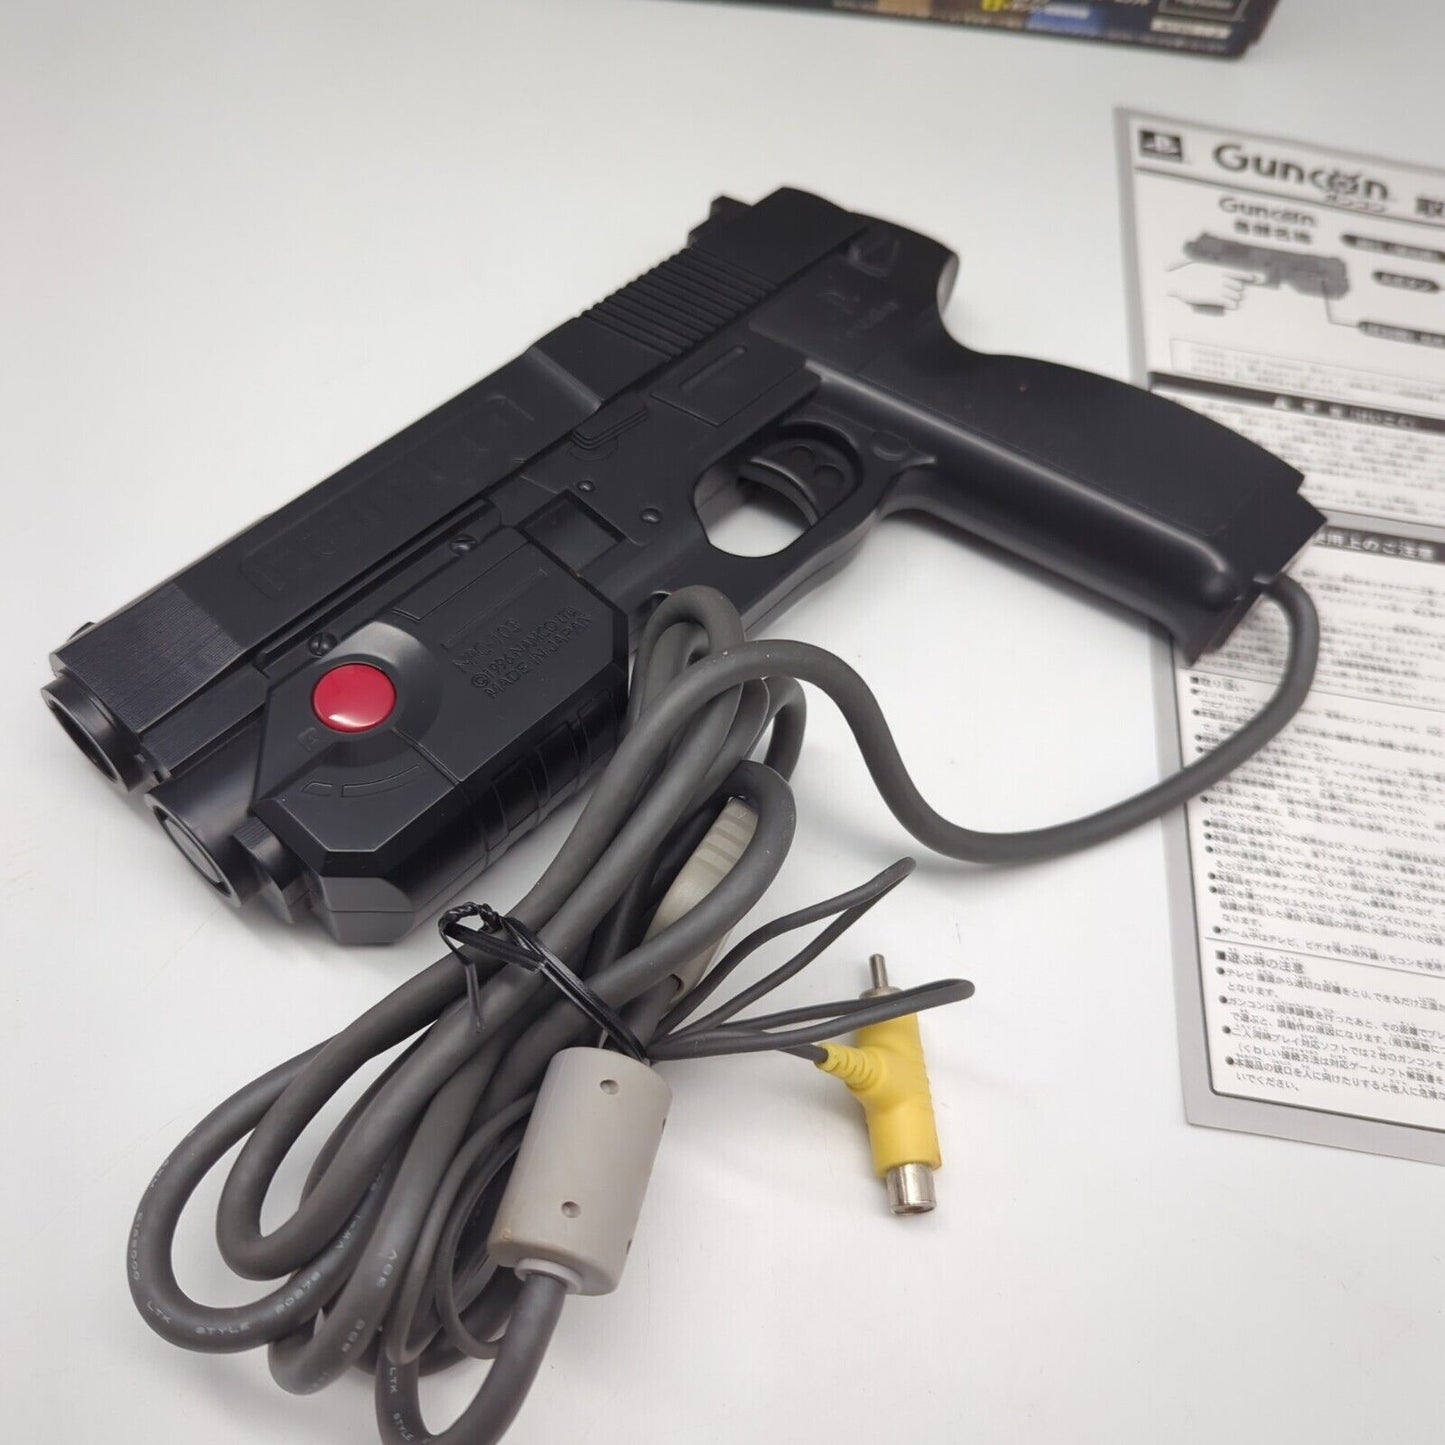 Guncon Black Controller Time Crisis NPC-103 OEM Playstation 1 Gun  w/2 Games JP